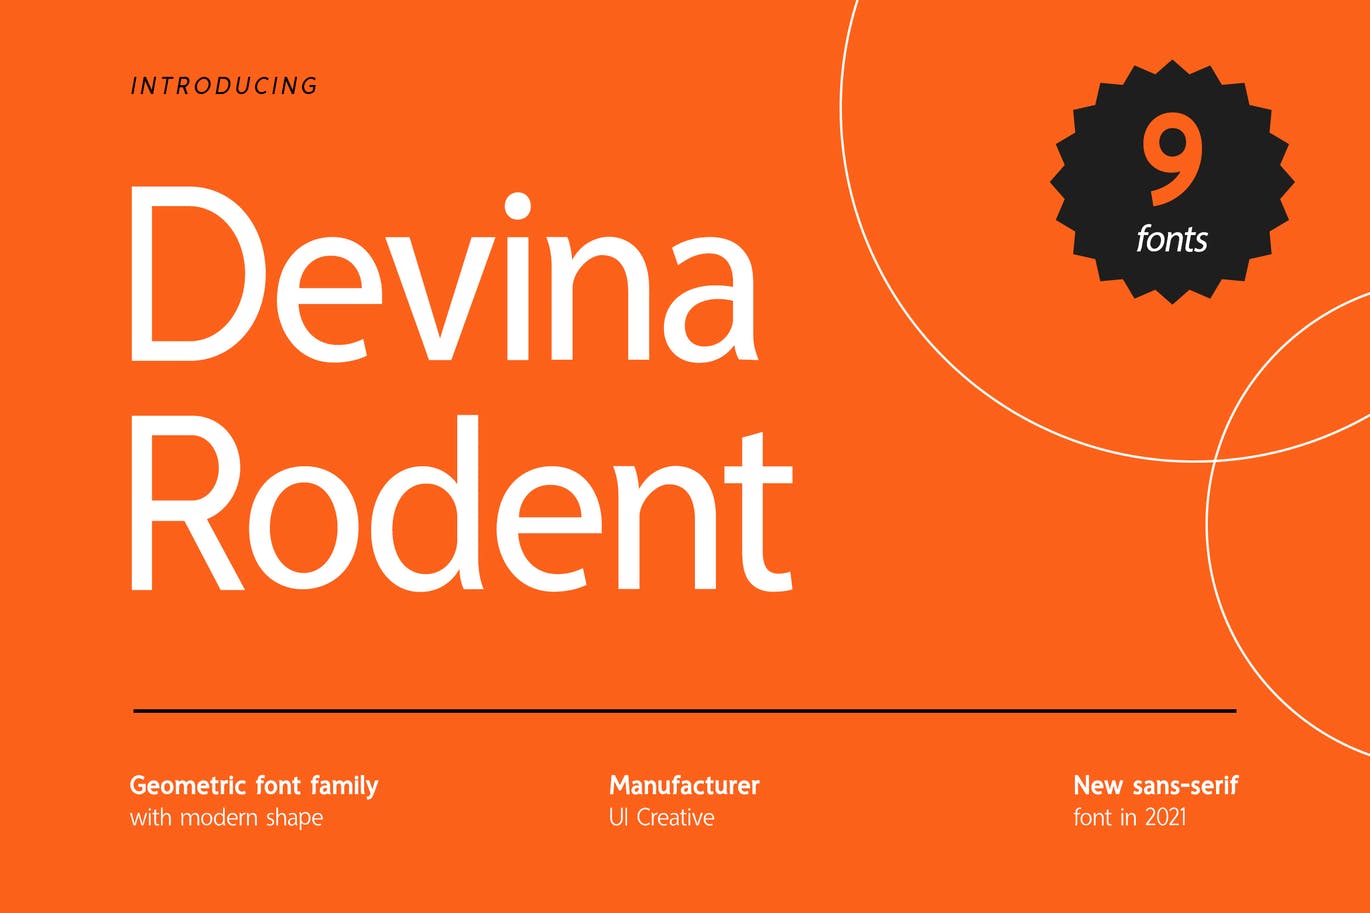 Devina Rodent a sans serif font family